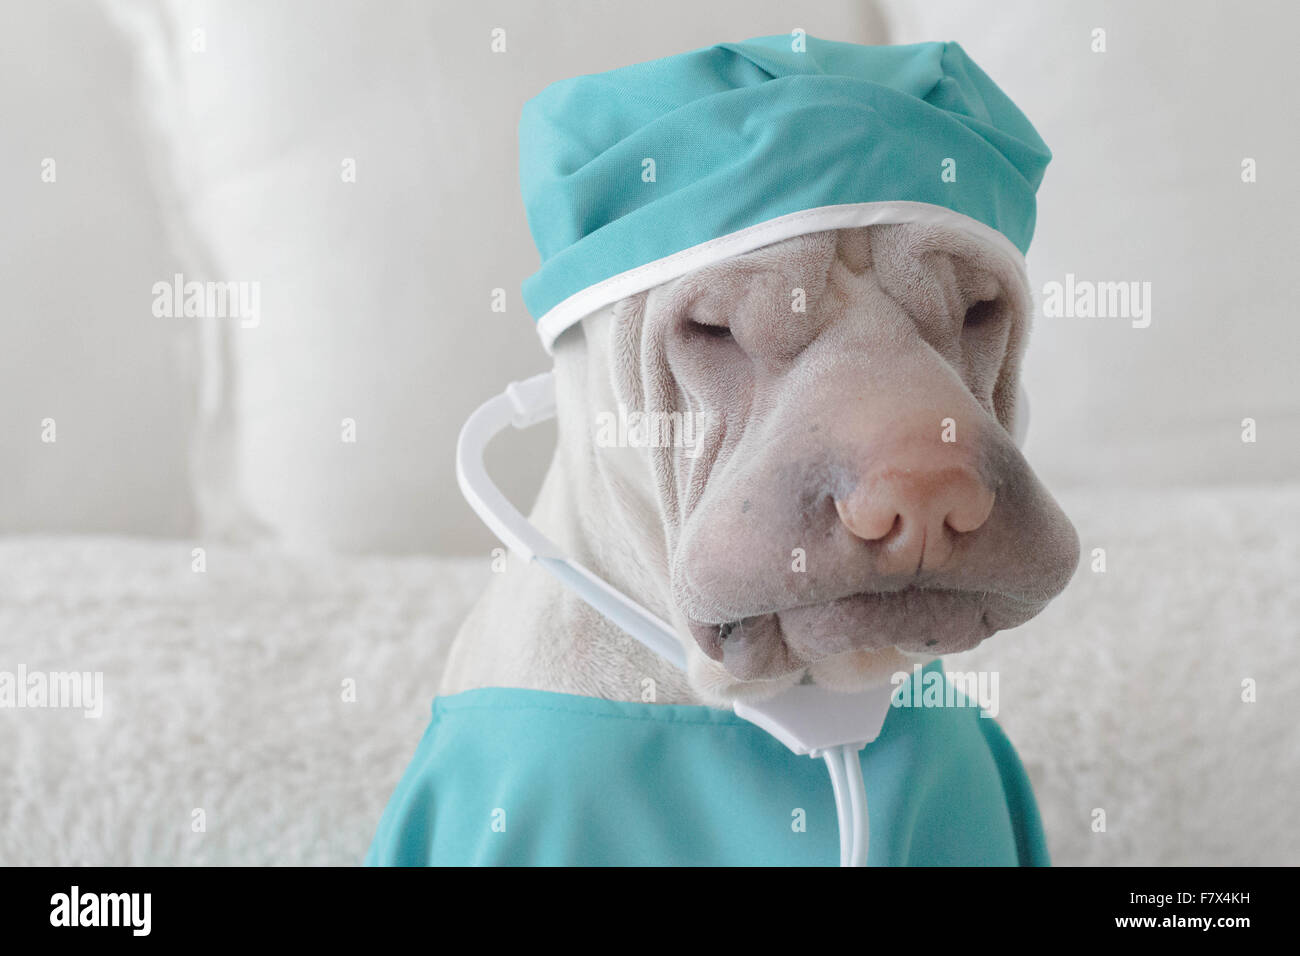 Shar Pei dog dressed as a surgeon Stock Photo